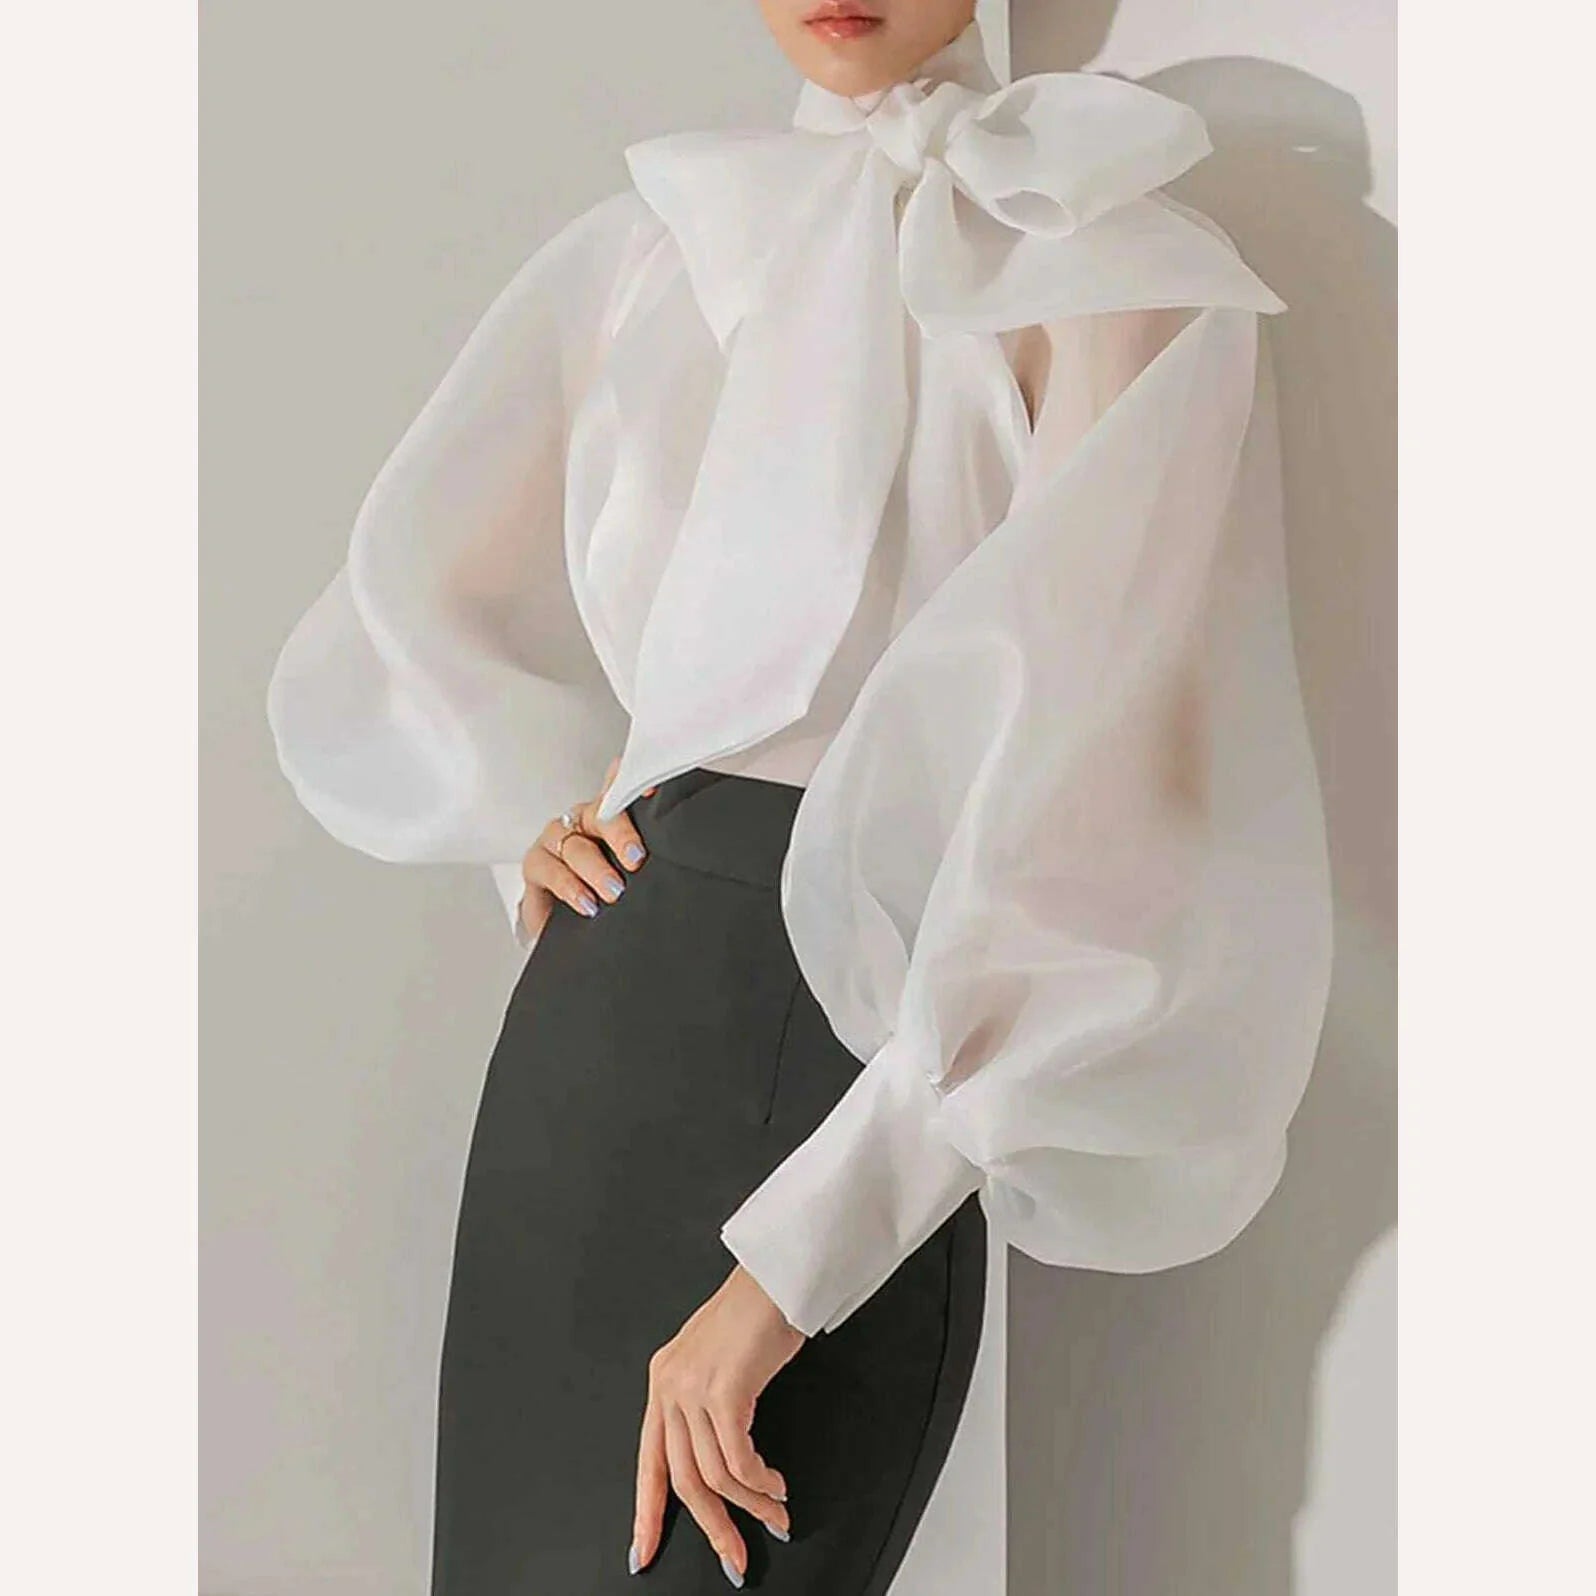 Women's Elegant Lantern Sleeve Shirt Chiffon Transparent Long Sleeve Sweet Lace-up Neck Polk Dot Casual Fashion Autumn Shirts